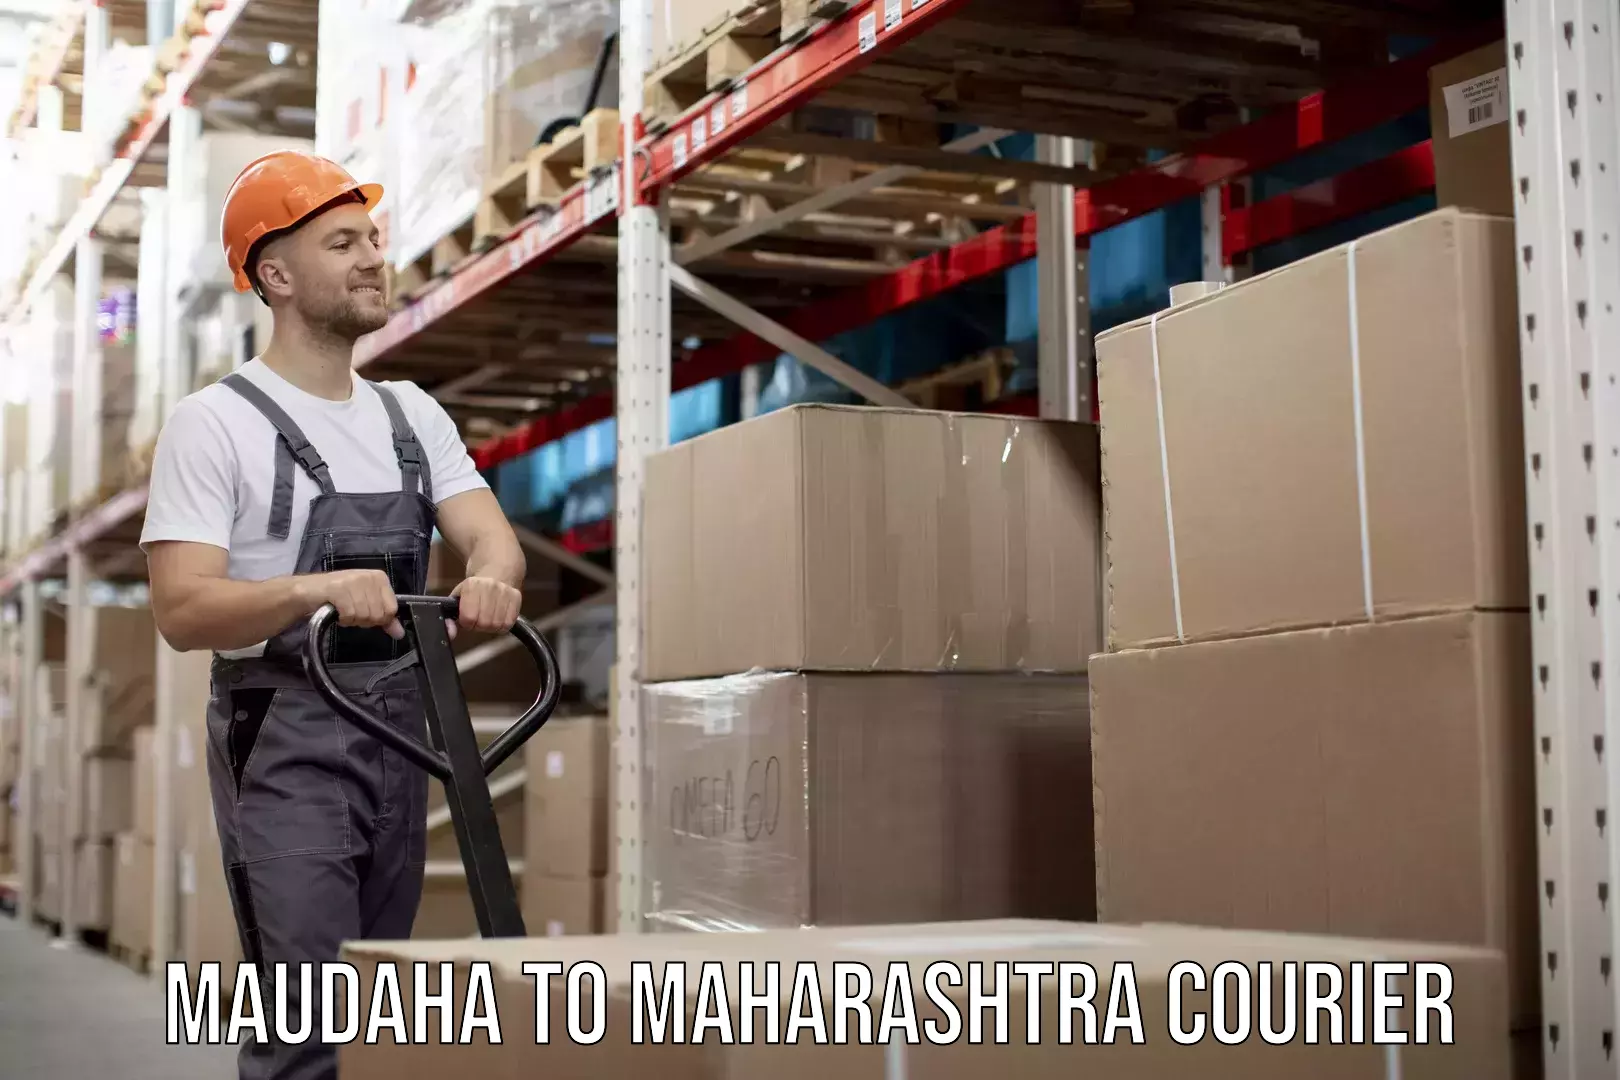 Quality relocation assistance Maudaha to Maharashtra